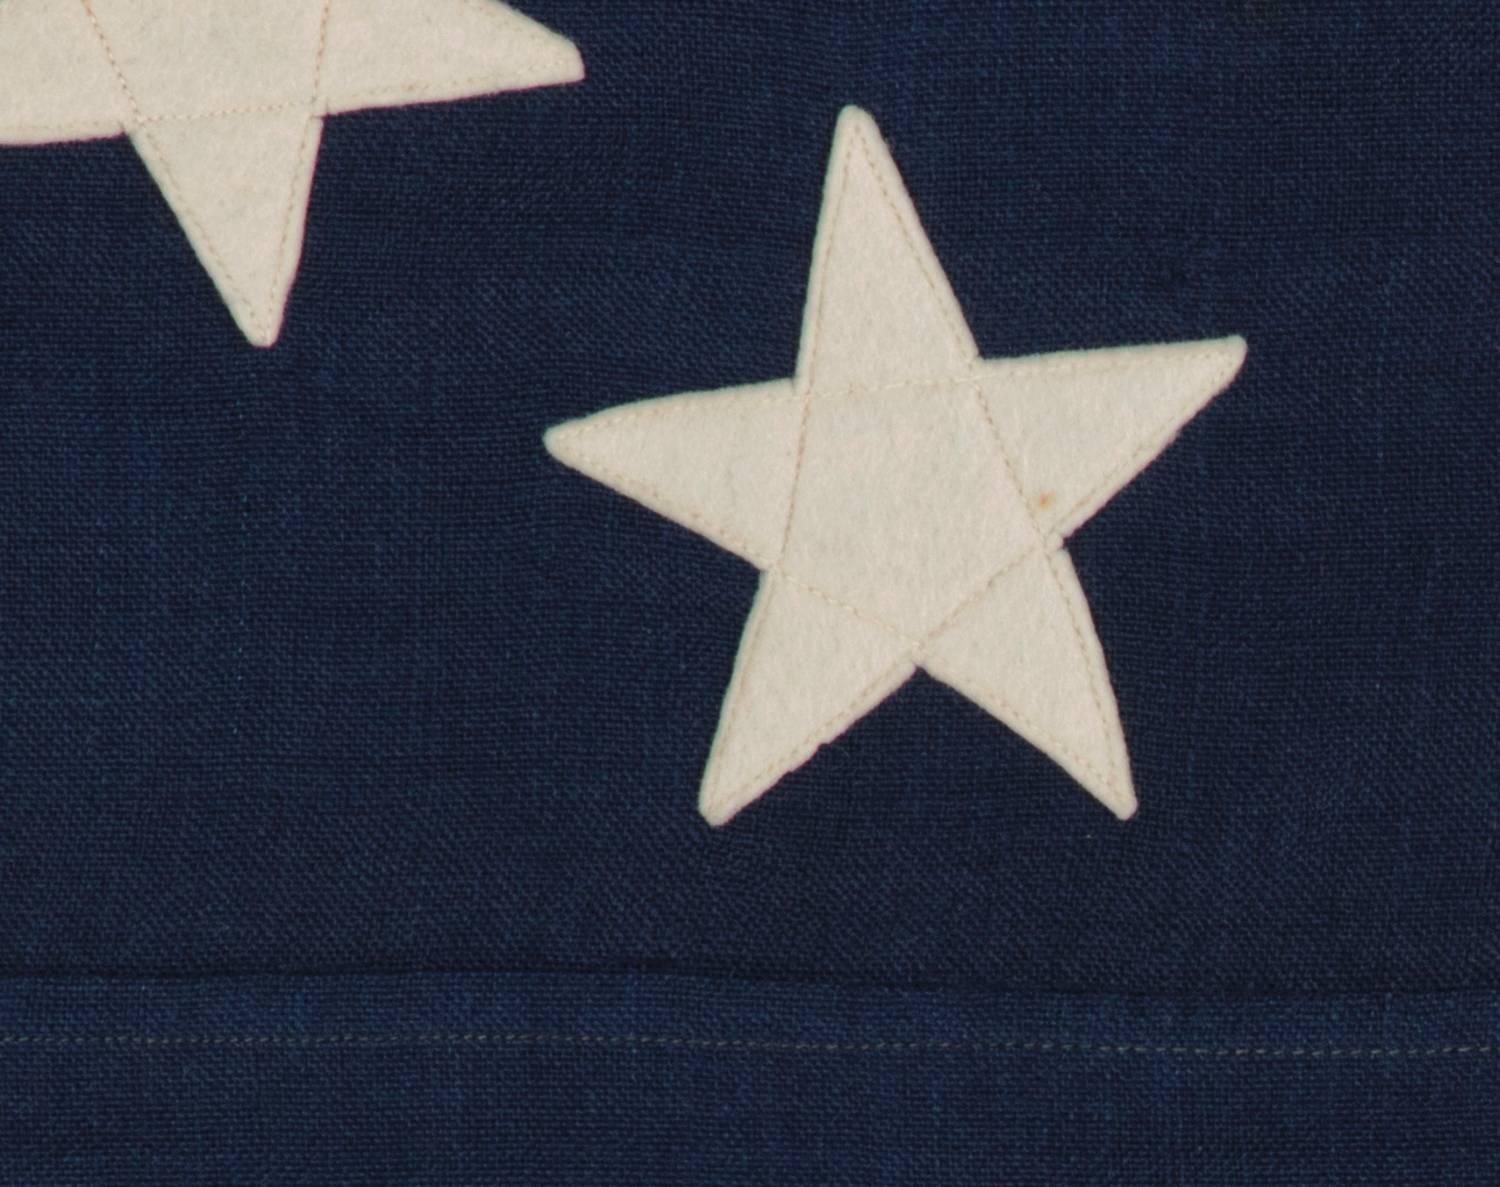 44 star american flag